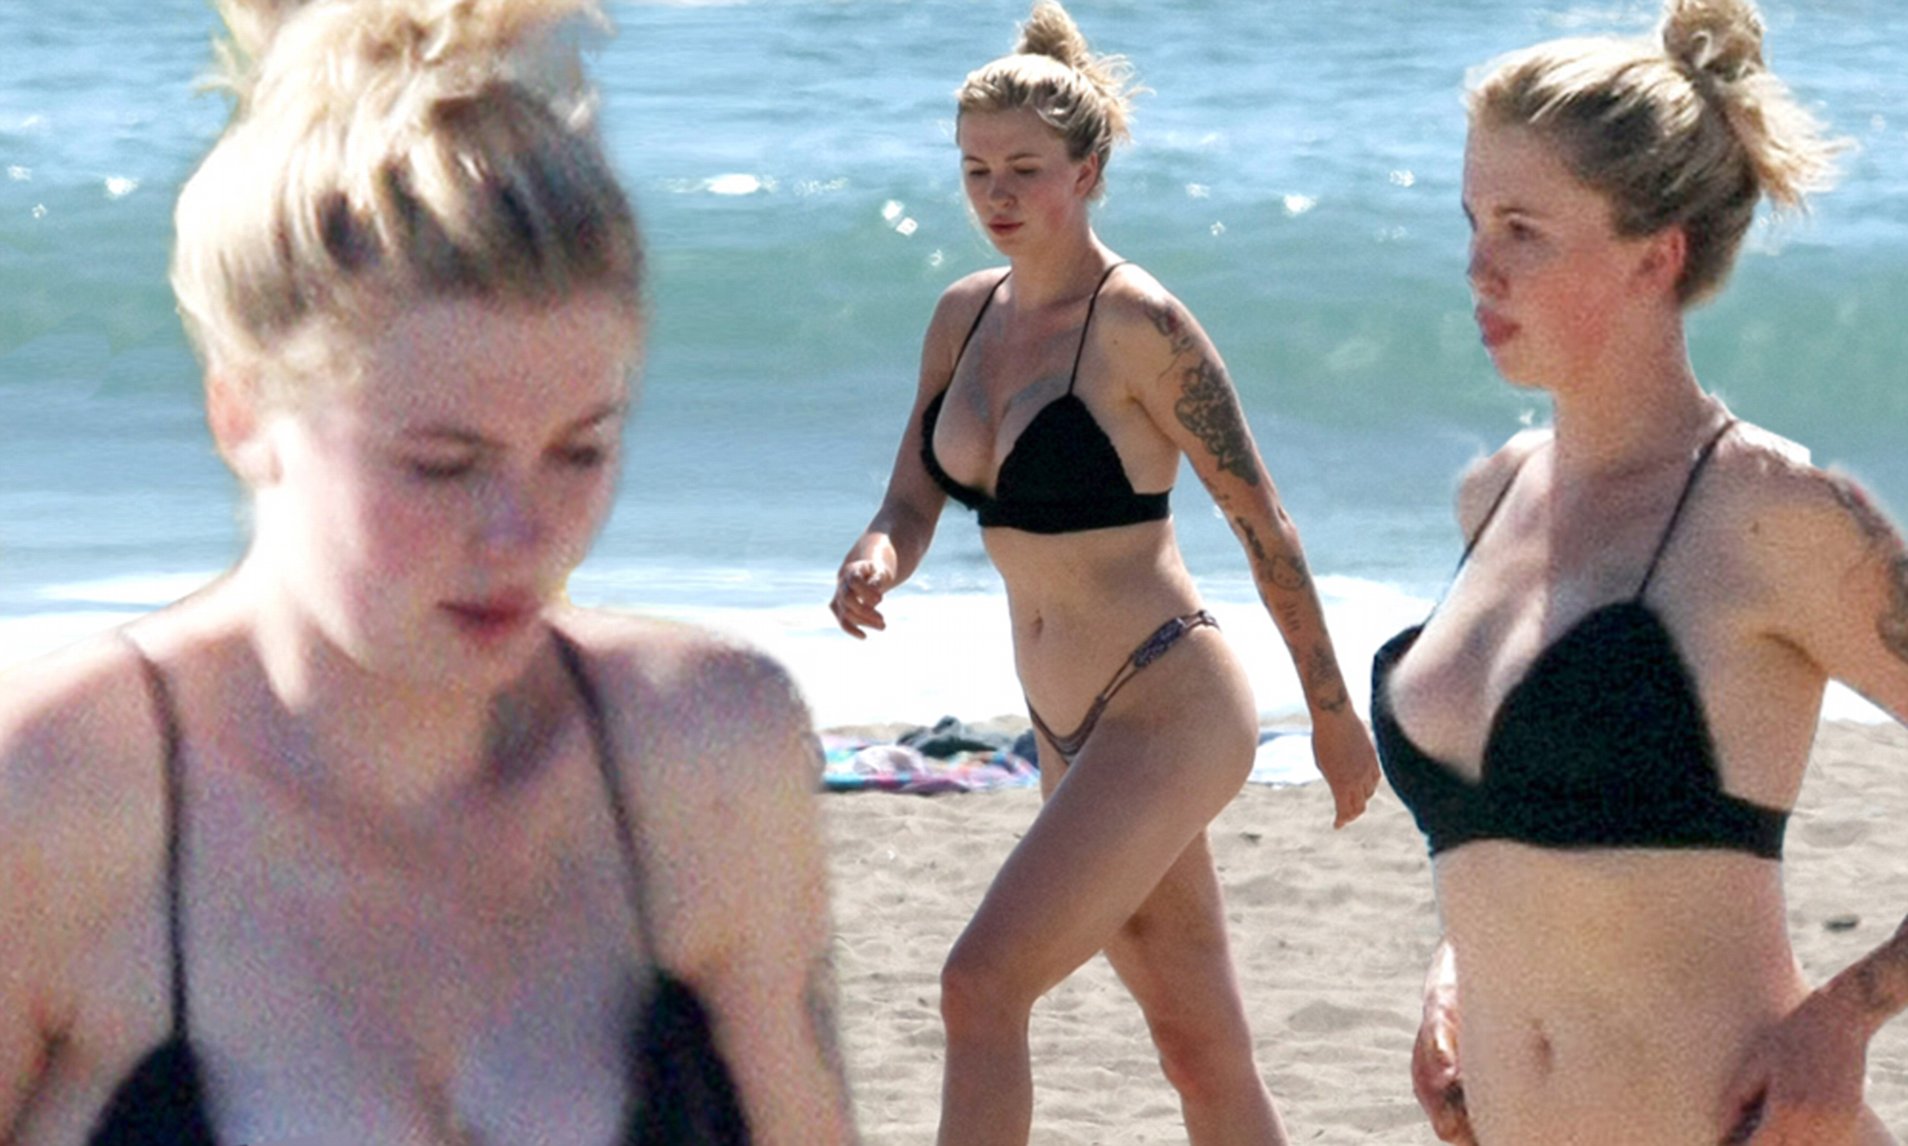 Ireland Baldwin suffers nip slip in bikini | Daily Mail Online